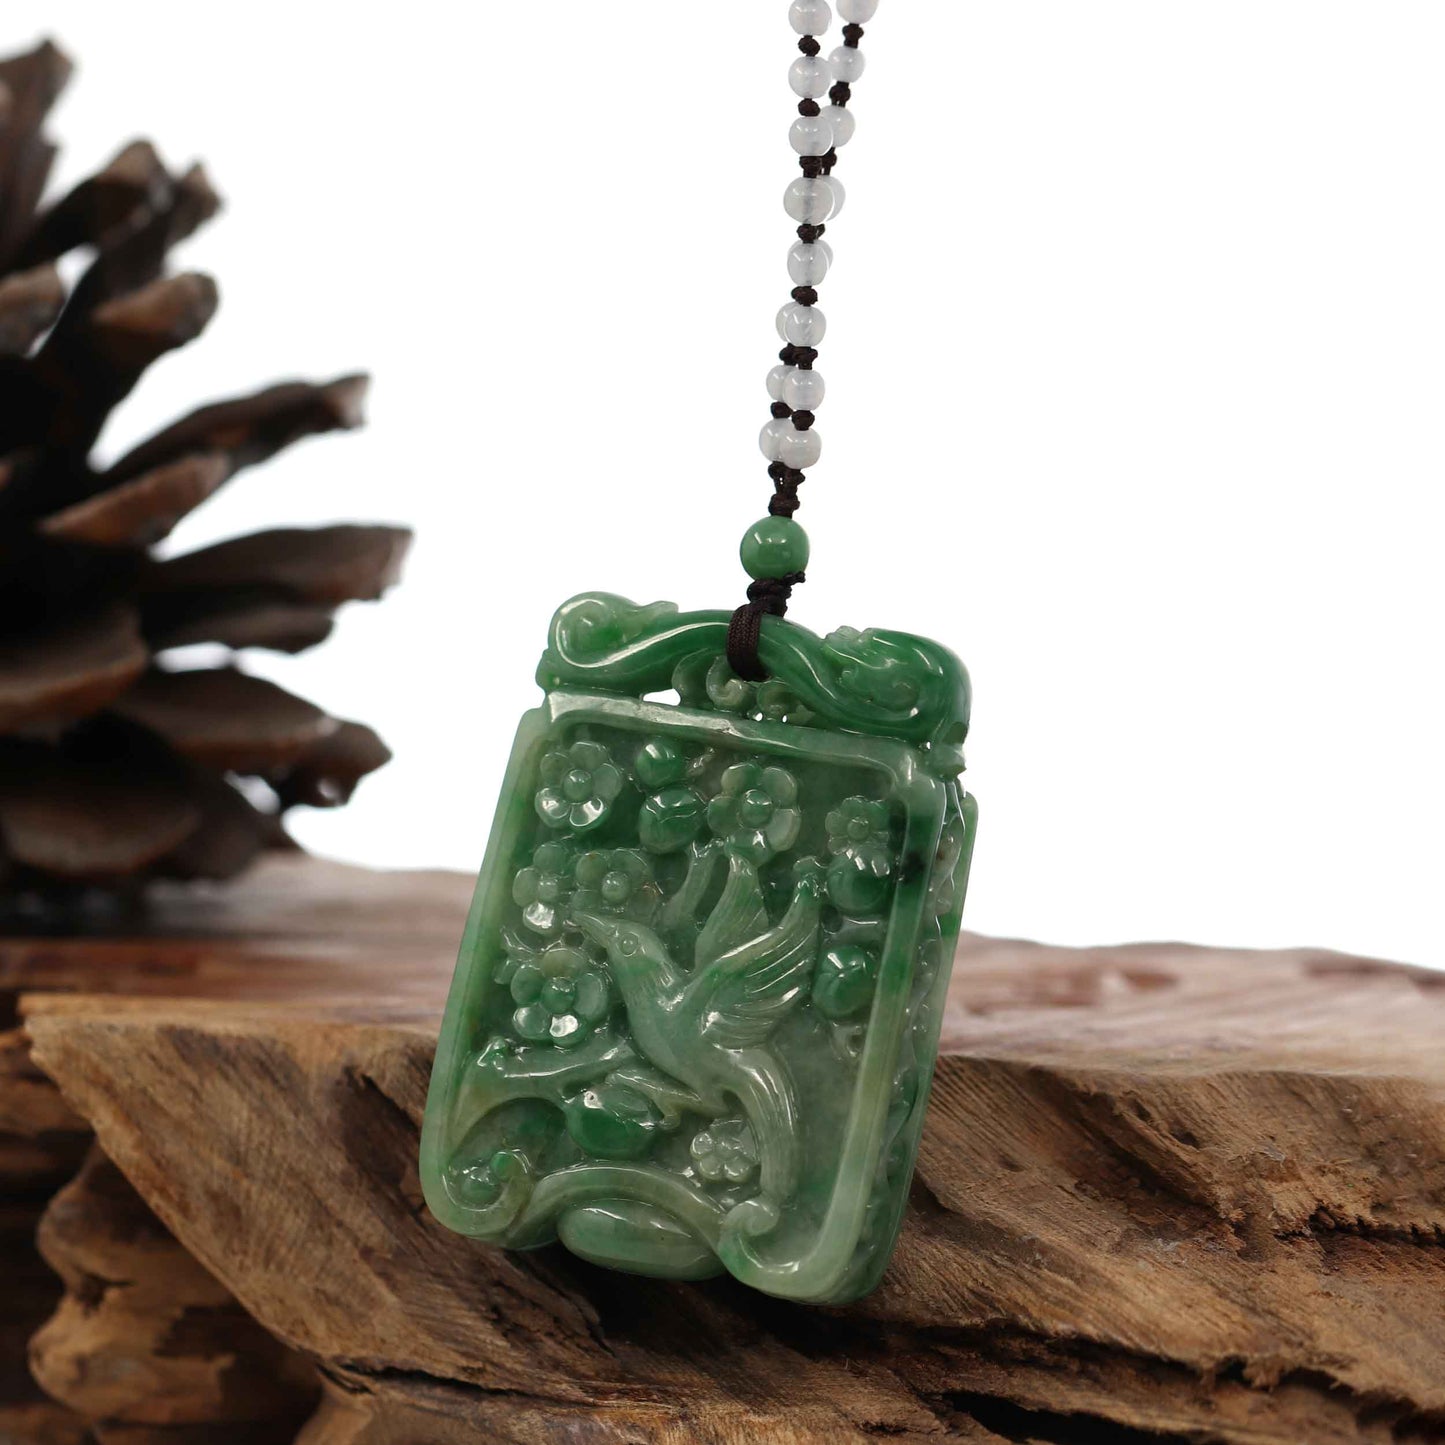 Genuine Green Jadeite Jade "Lucky Bird on Branch" Pendant Necklace With Real Jadeite jade Beads Necklace